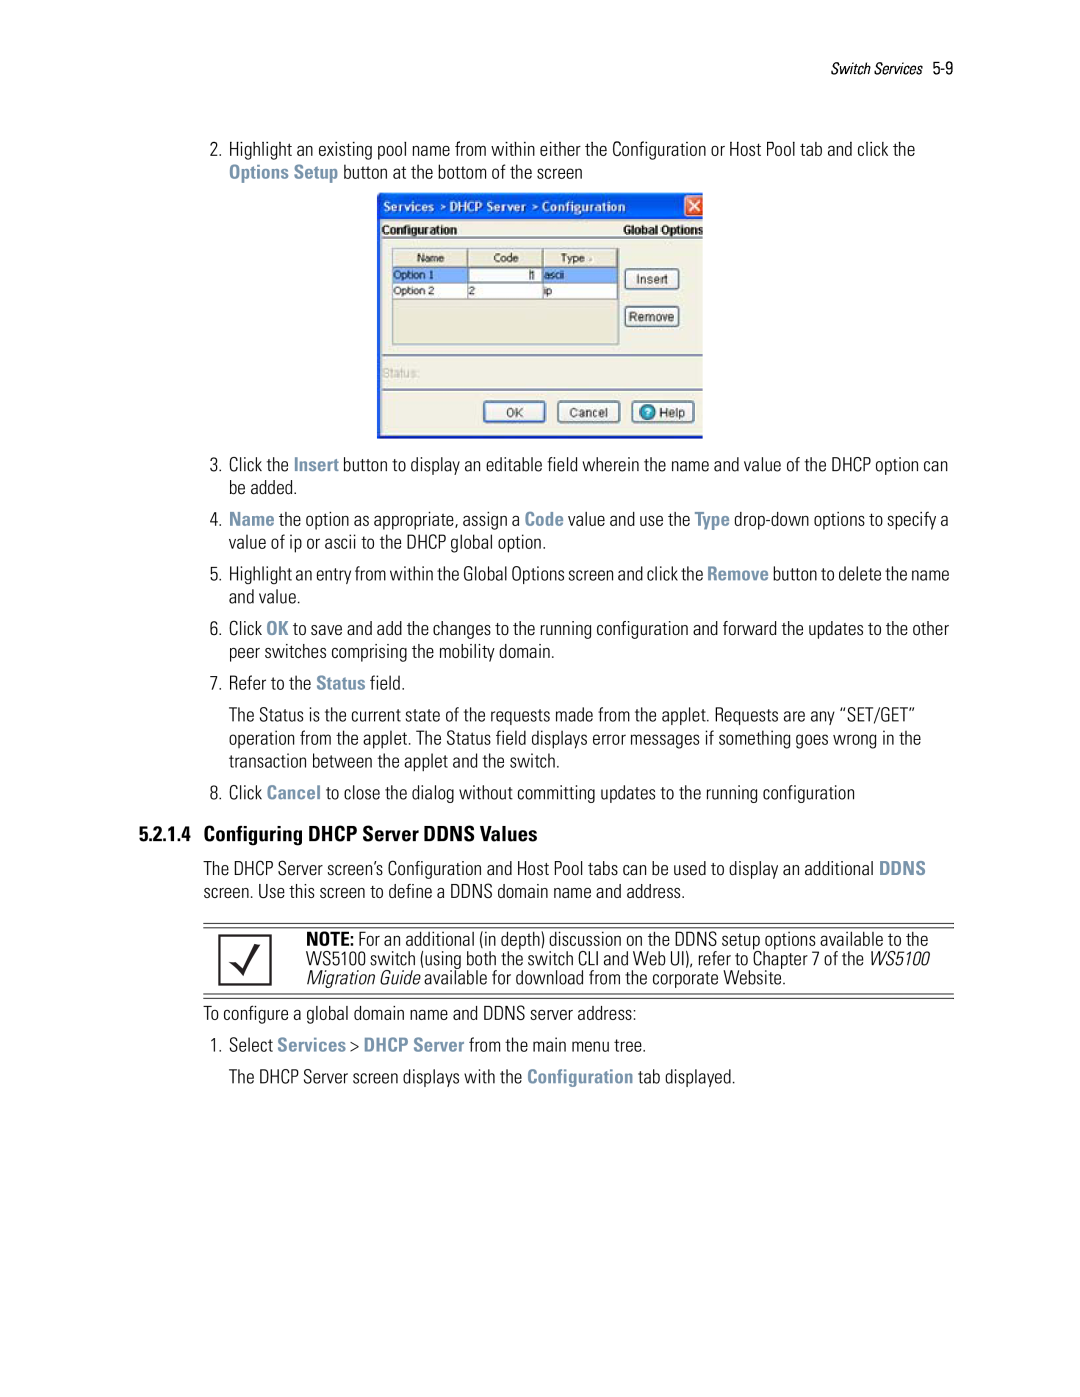 Motorola WS5100 manual 5.2.1.4Configuring DHCP Server DDNS Values 